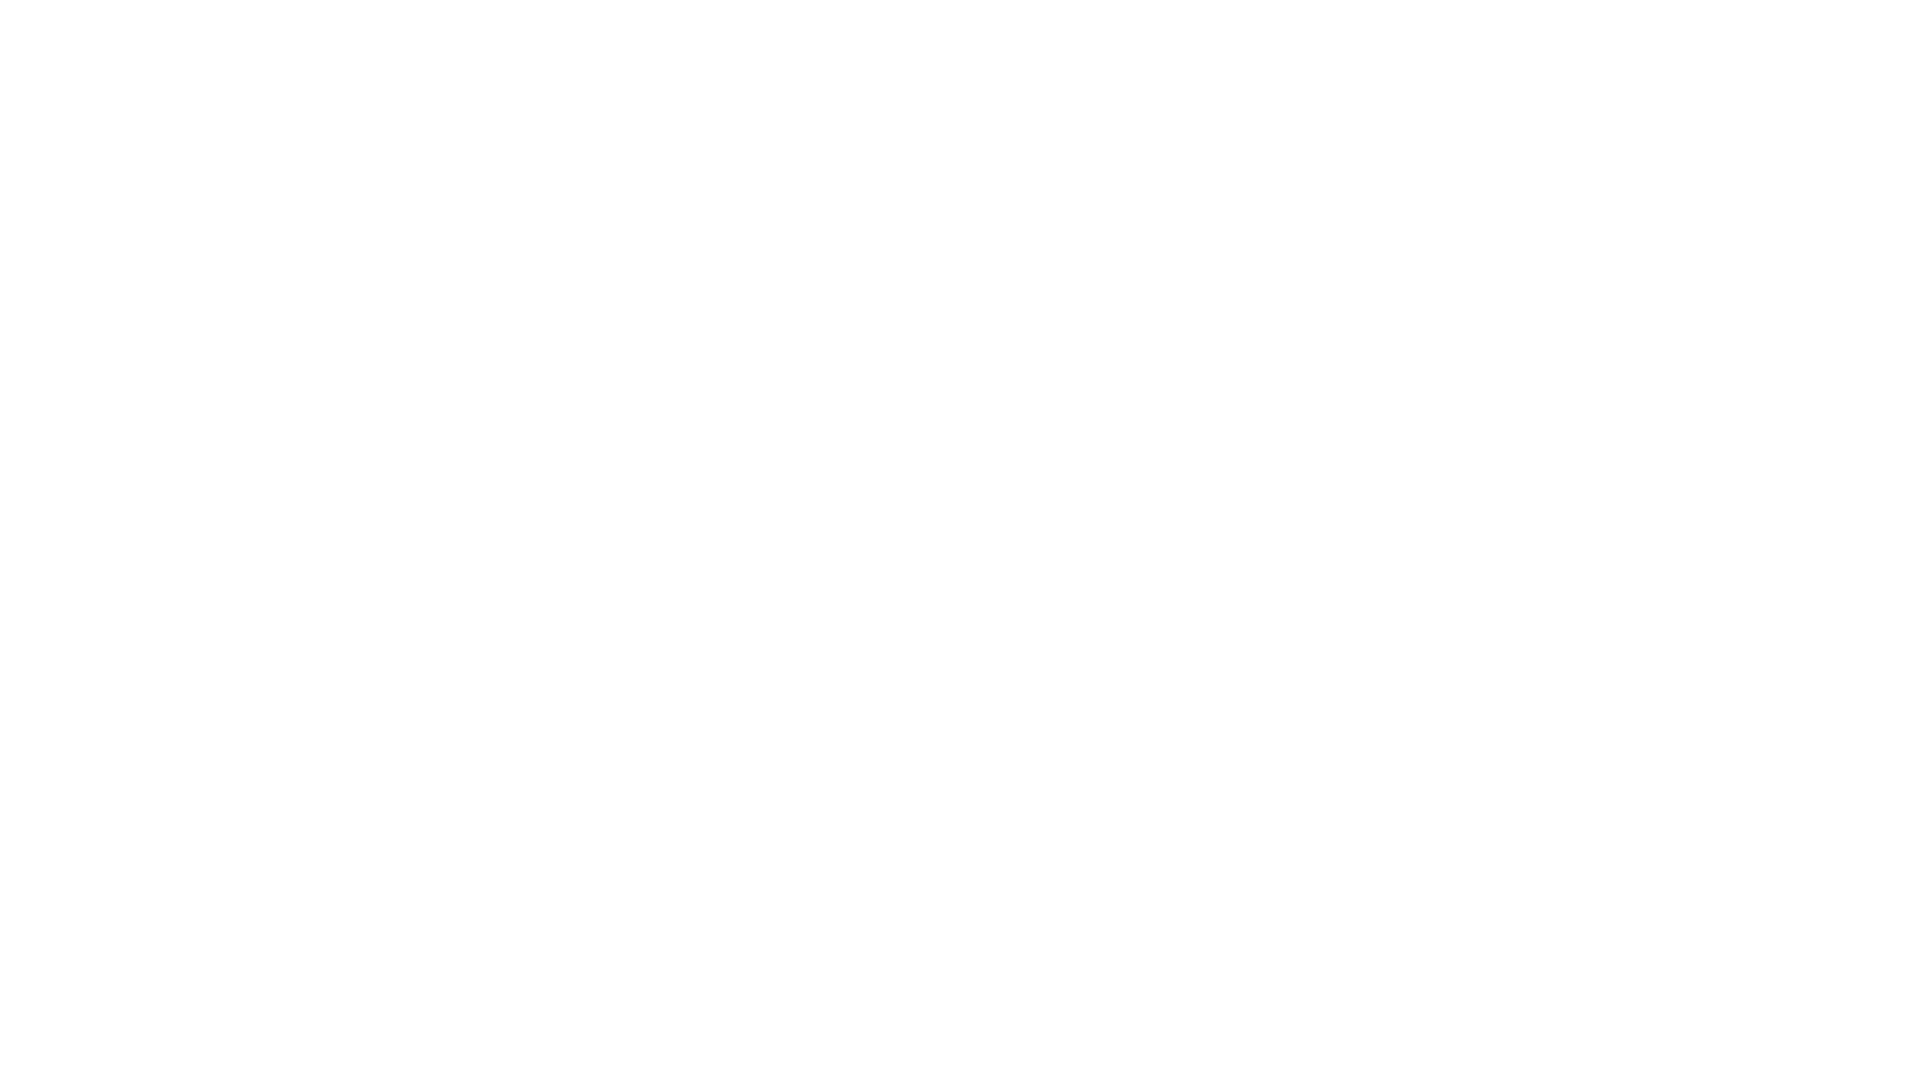 Pi design